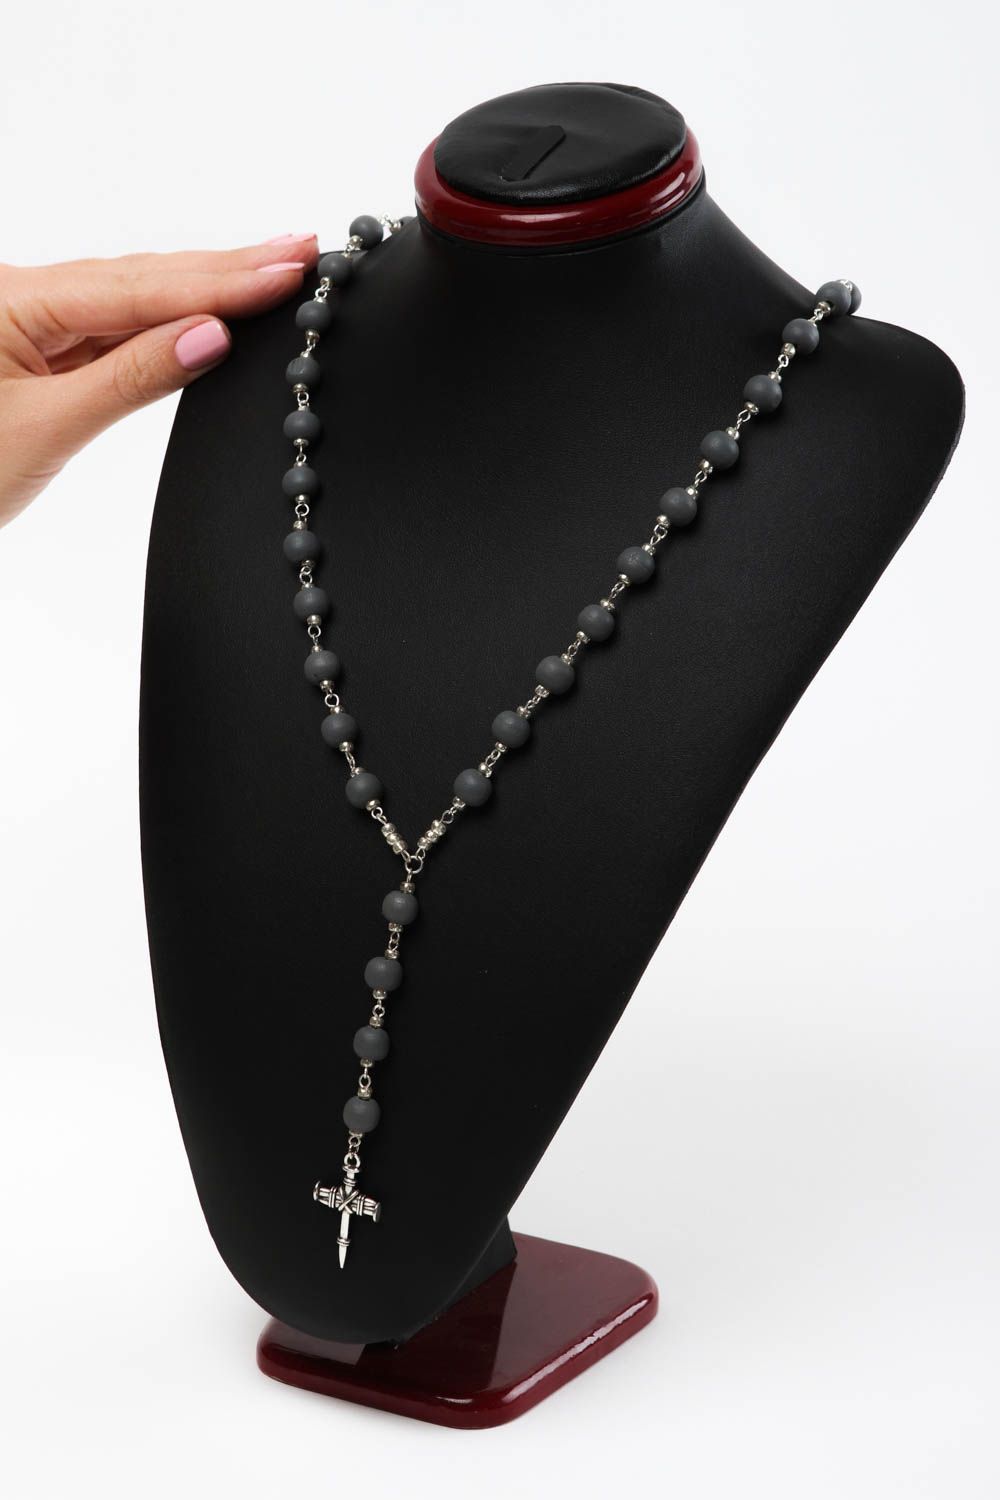 Handmade cute rosary beautiful designer accessory stylish catholic present photo 5